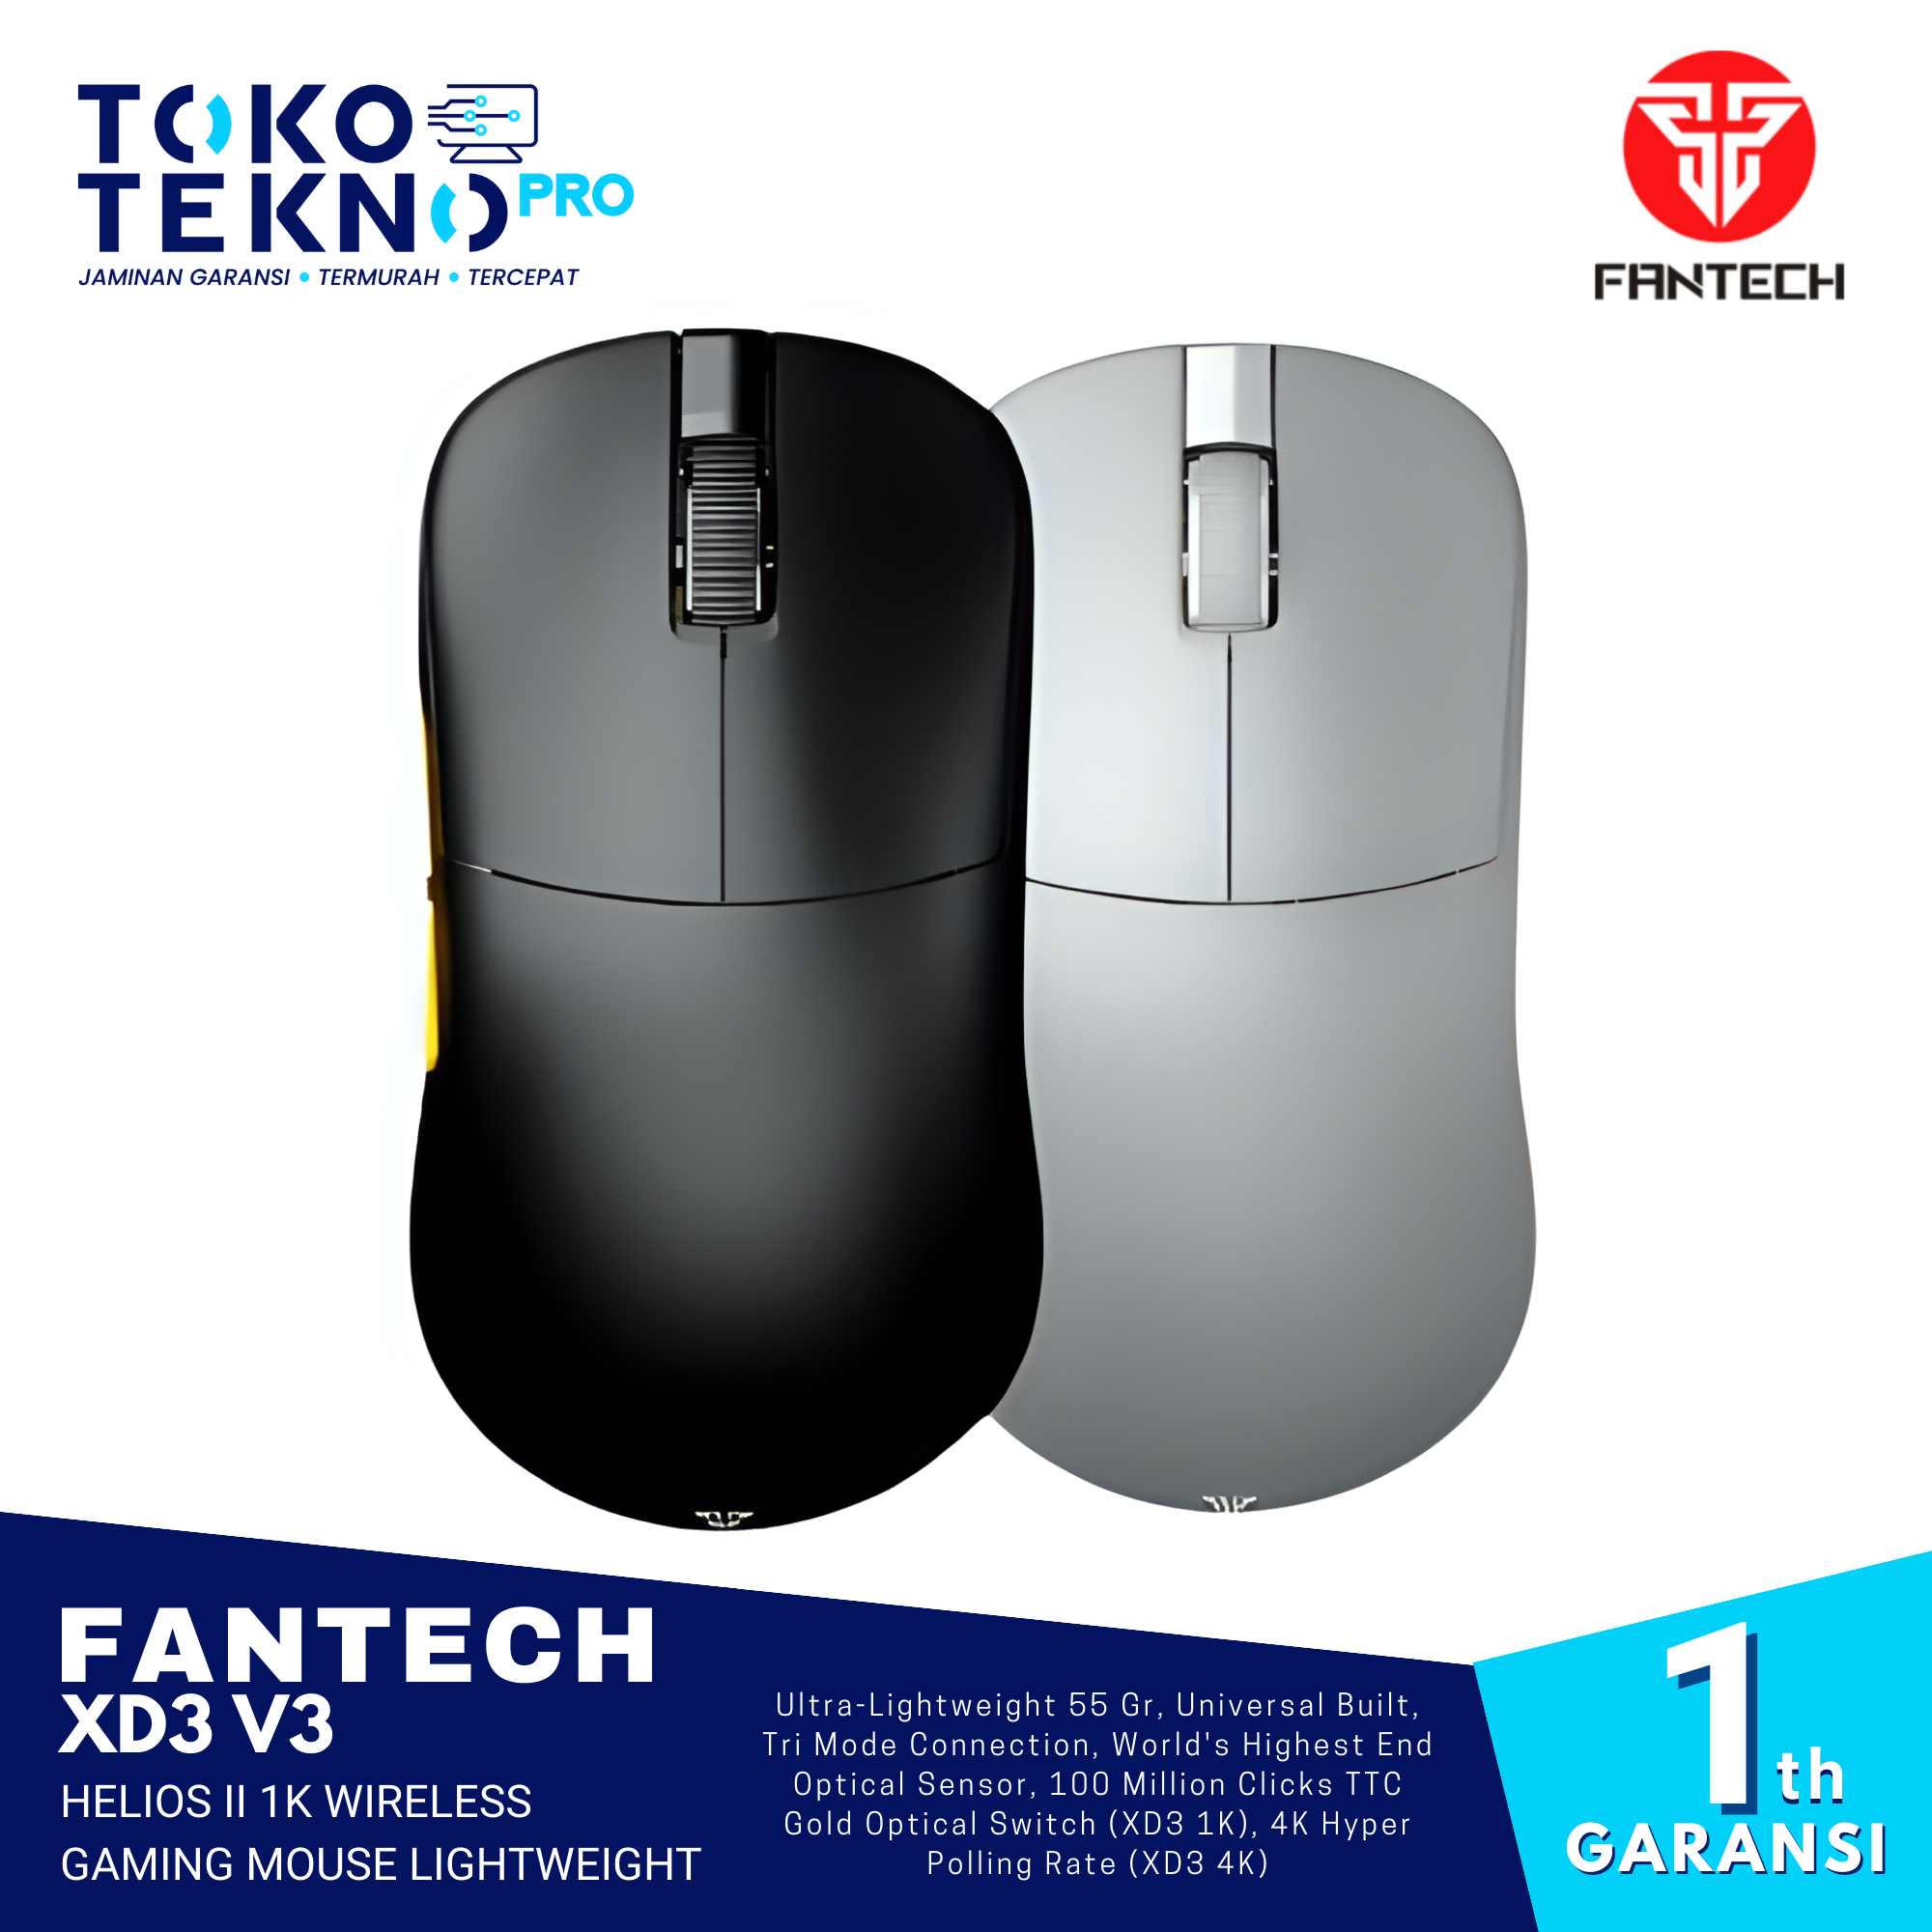 Fantech XD3 V3 Helios II 1K Wireless Gaming Mouse Lightweight